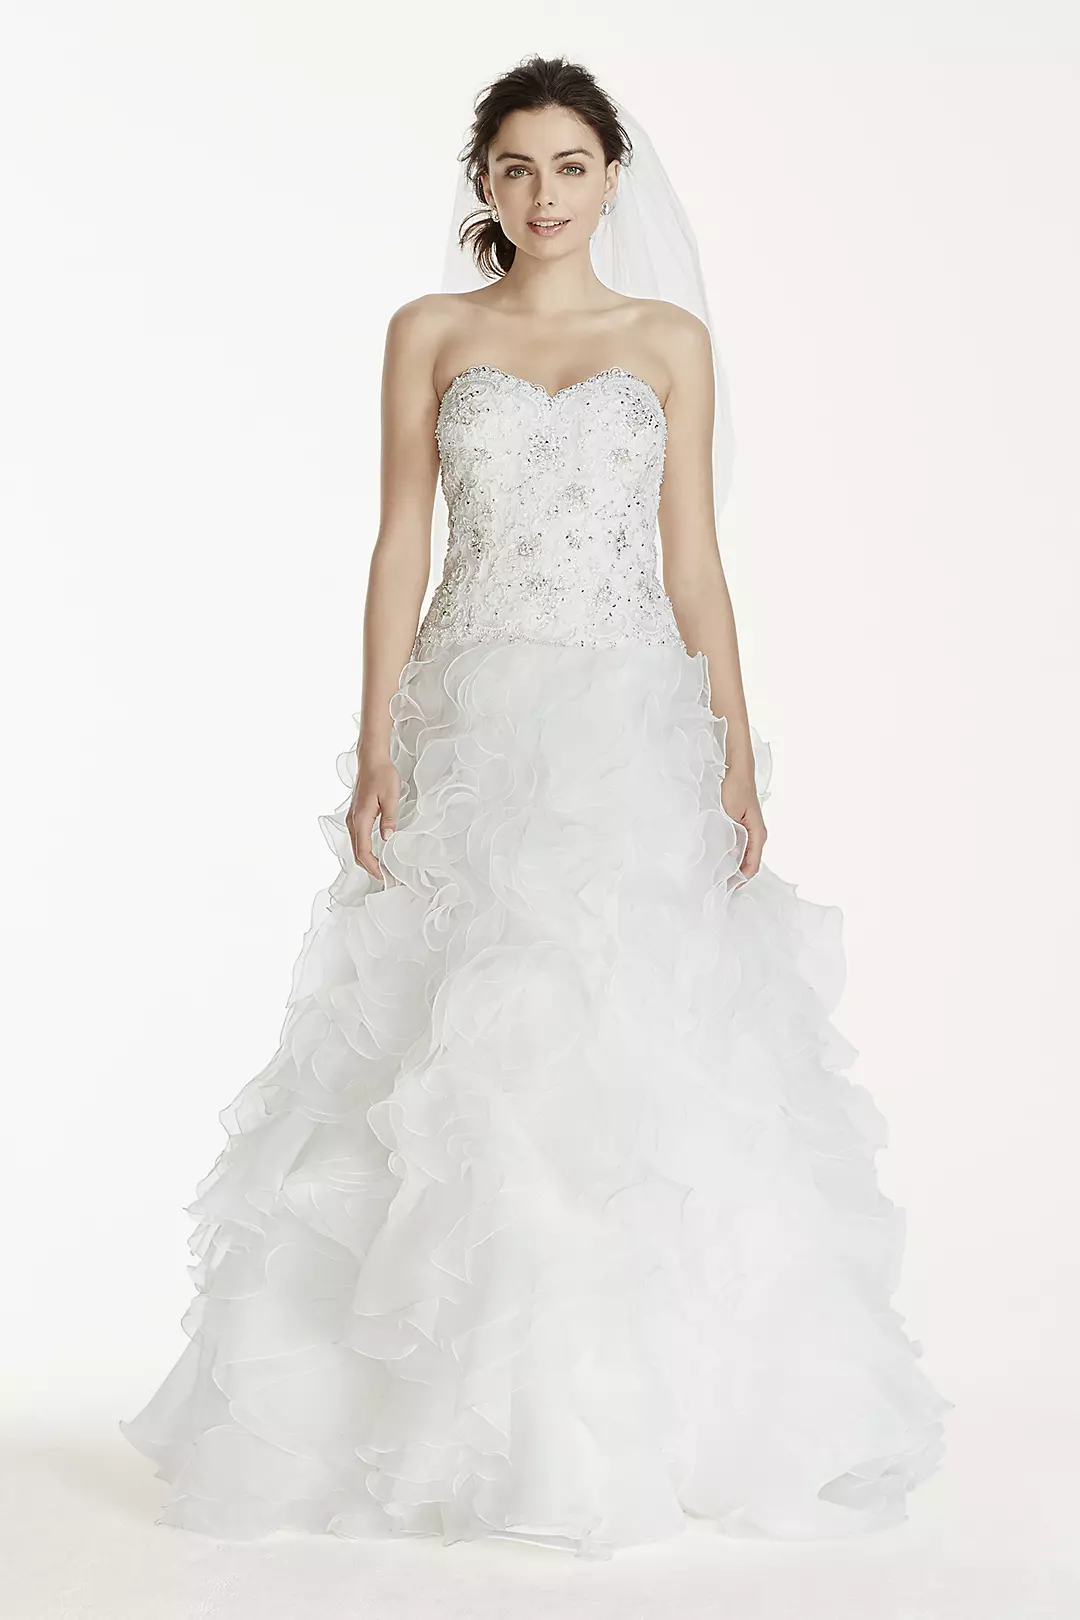 Jewel Organza Wedding Dress with Ruffled Skirt Image